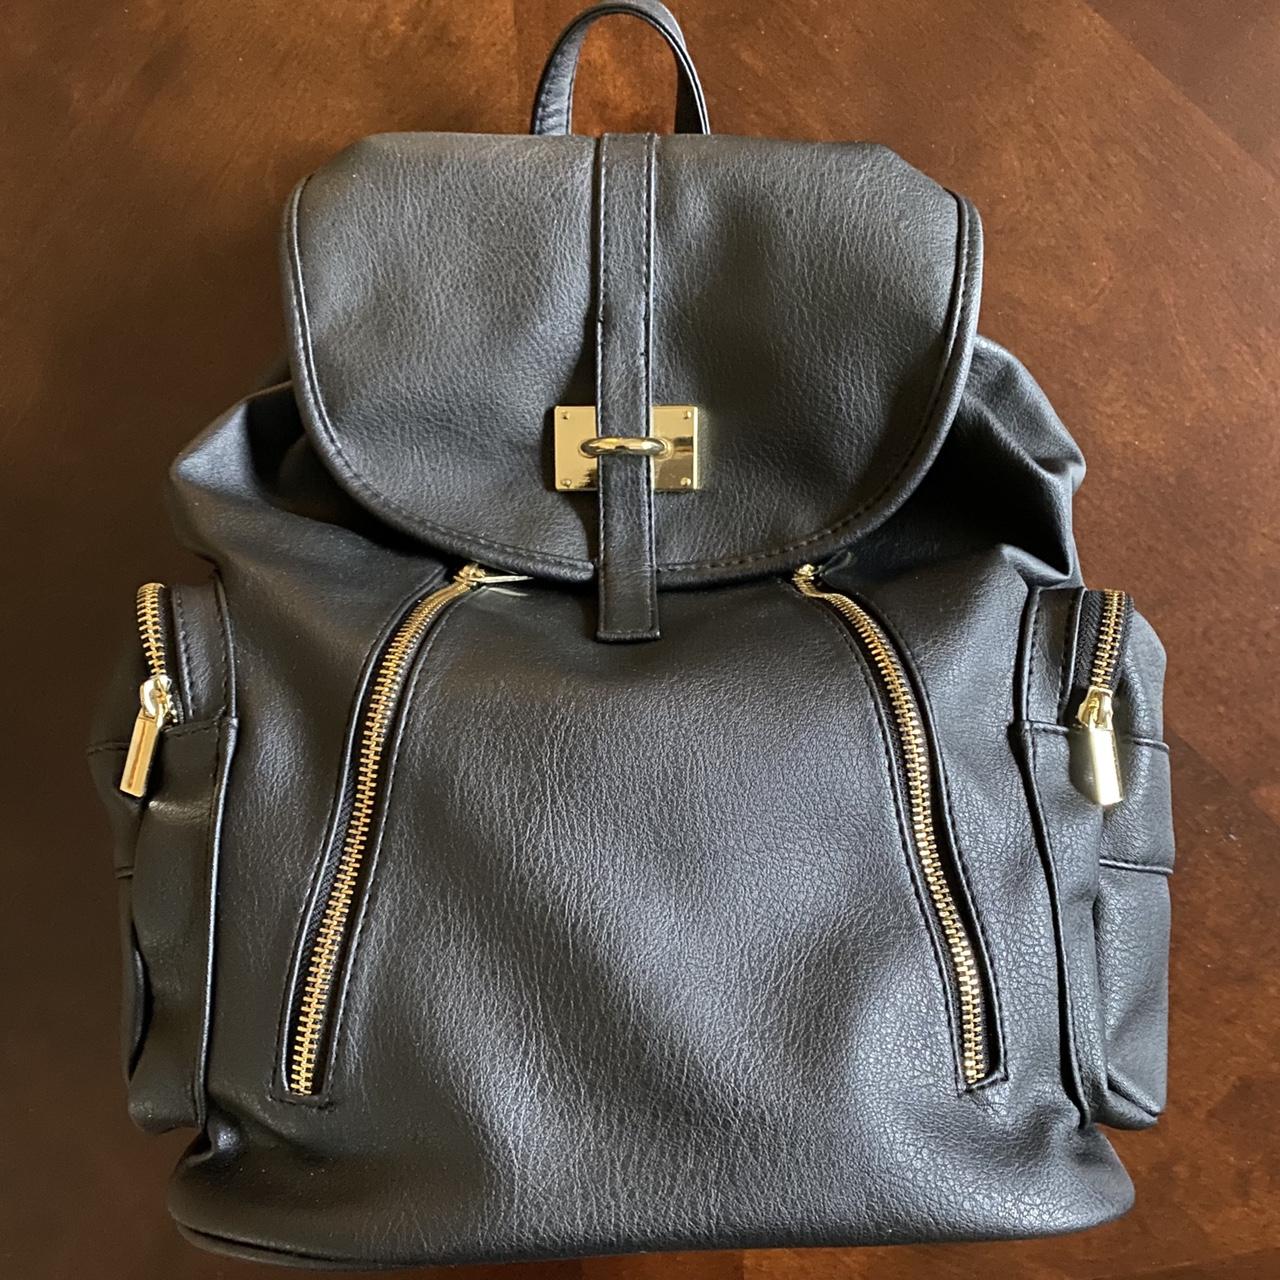 New Target Limited Edition Backpack Handbag with... - Depop